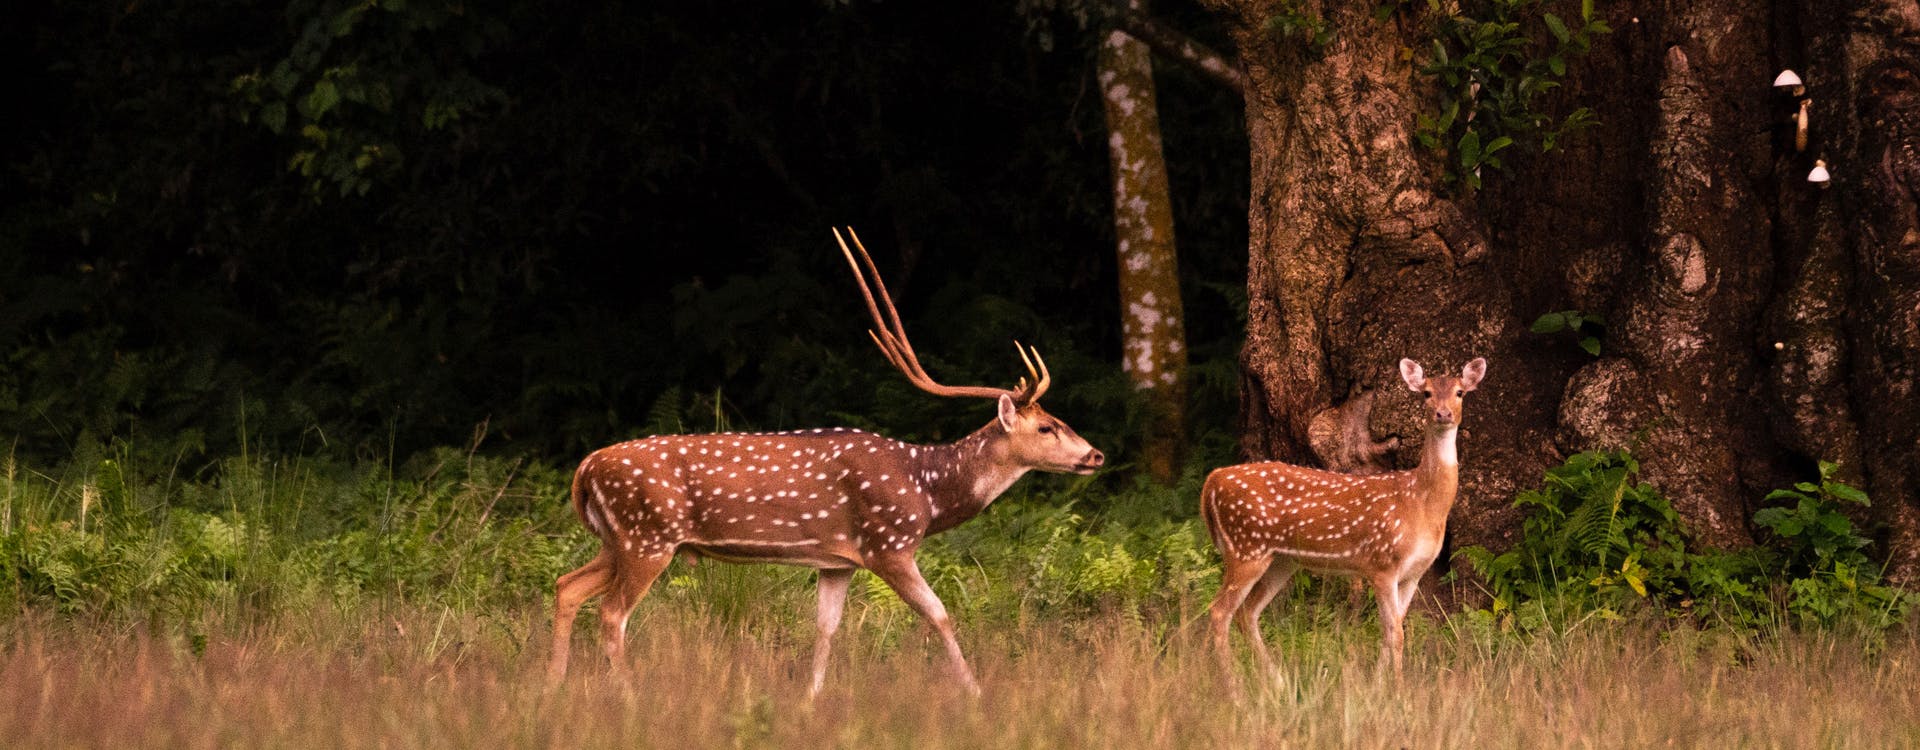 Bardia National Park Tour